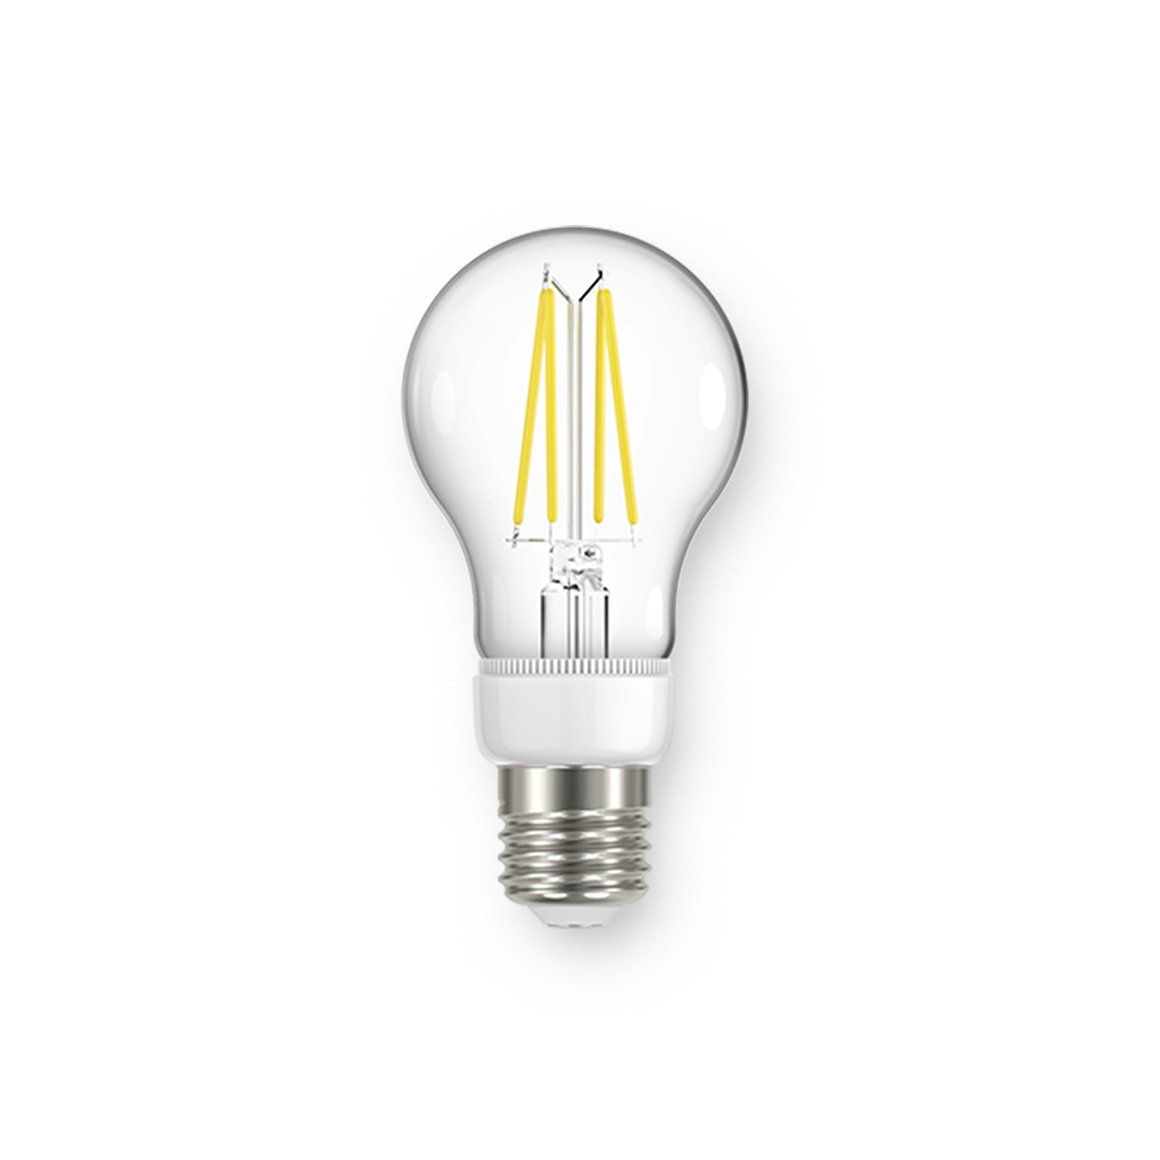 Leedarson smart filament bulb a60 clear e27